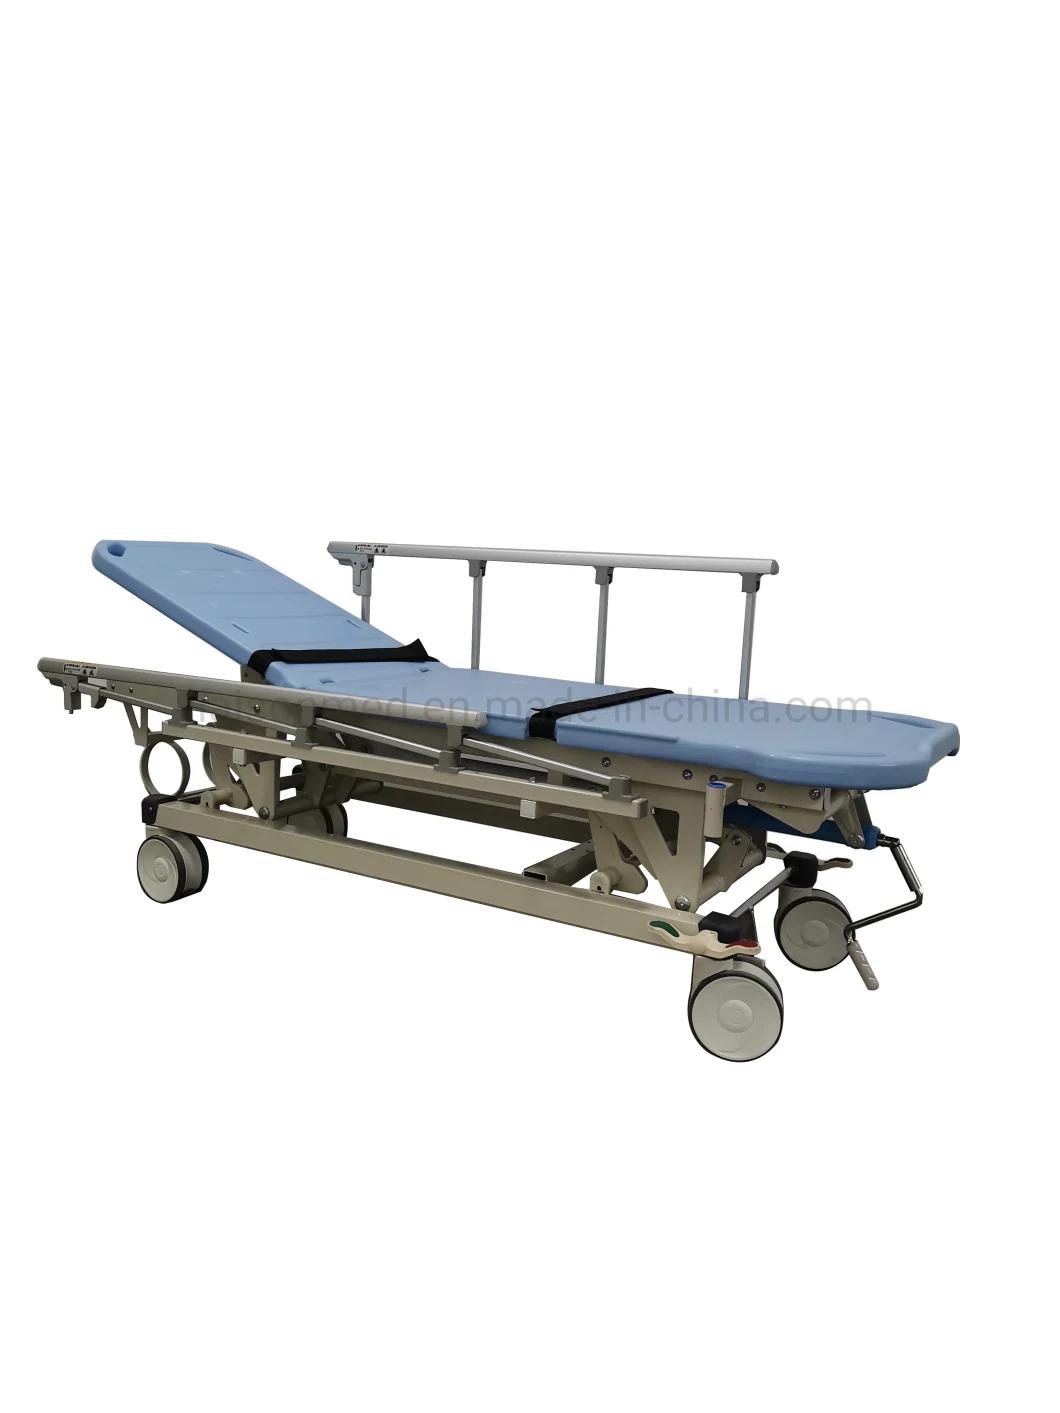 Mn-SD006 Multi-Function Foam Mattress Hospital Aluminum Emergency Patient Ambulance Stretcher